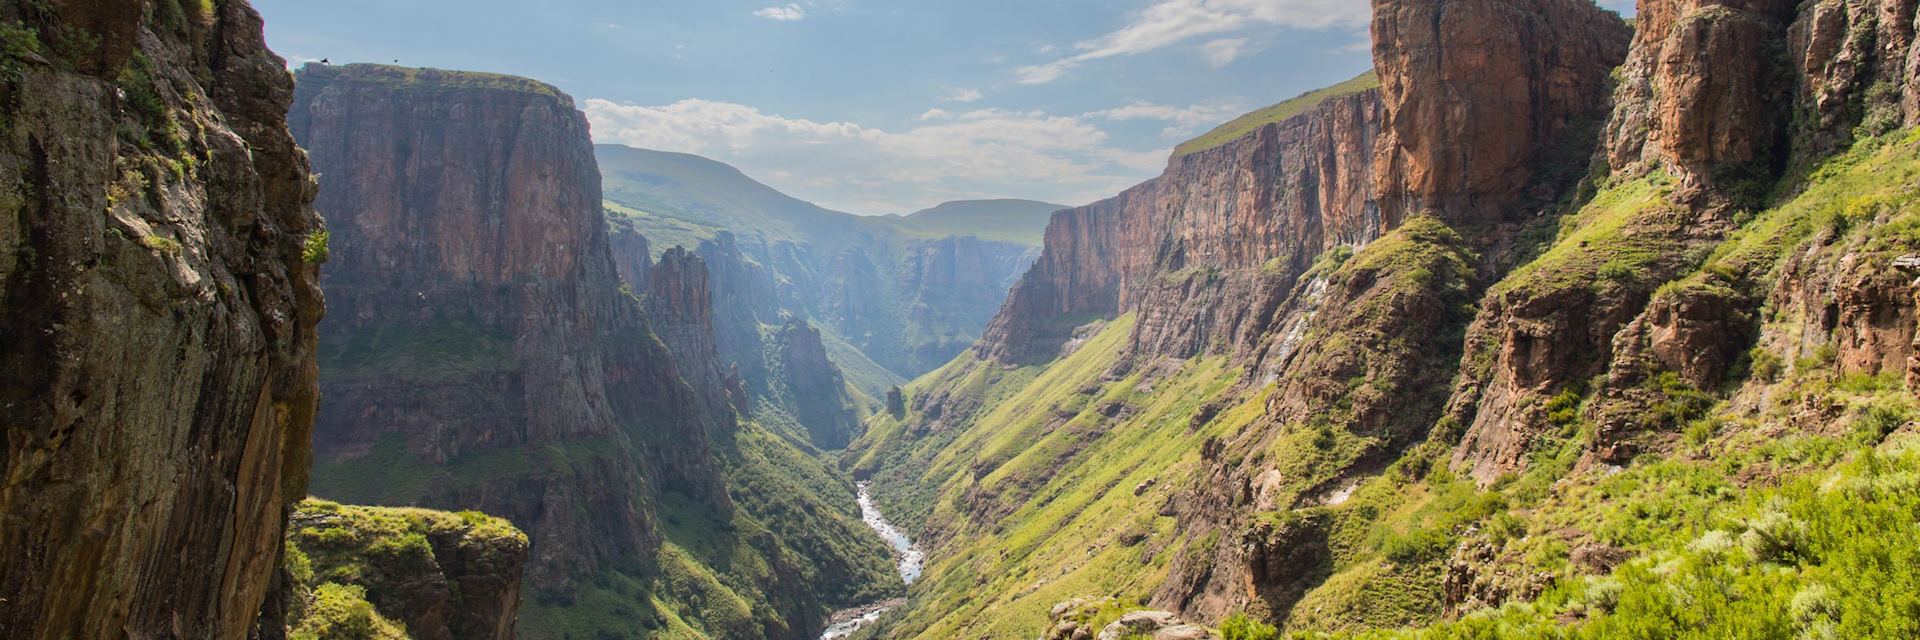 Maletsunyane River Valley, Lesotho